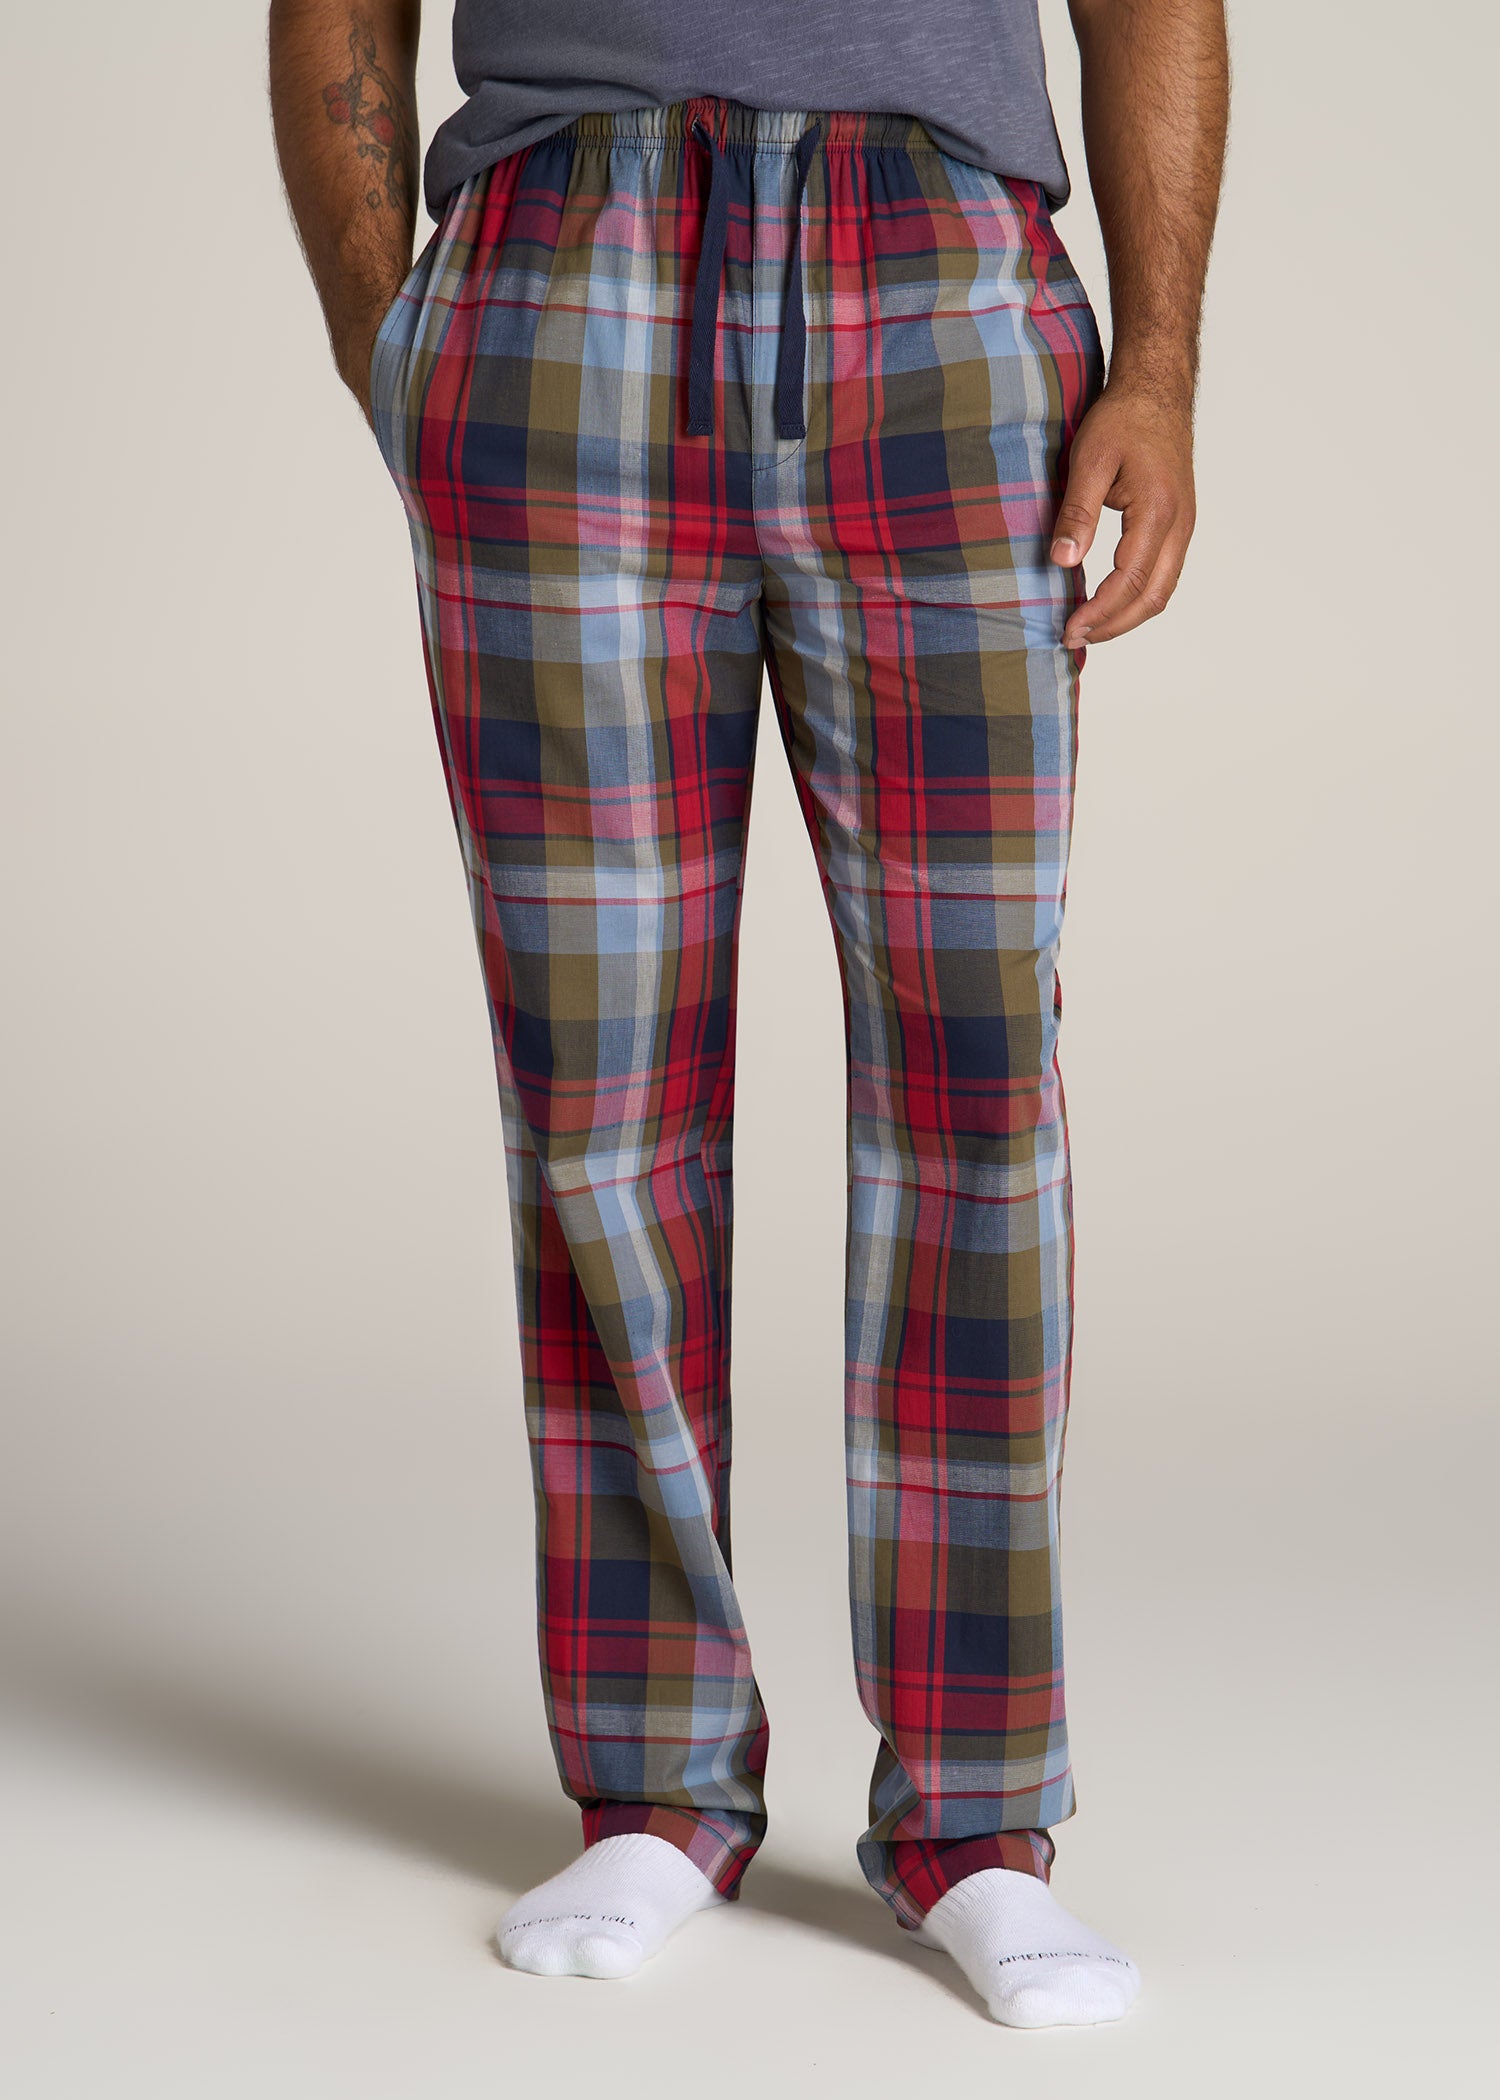 Pajama Pants with Pockets for Women Loose Fit - Mens Pajama Pants, Soft  Cotton Sleep Lounge Pants,Casual Comfortable Soft Sleep Pants S-XXL 